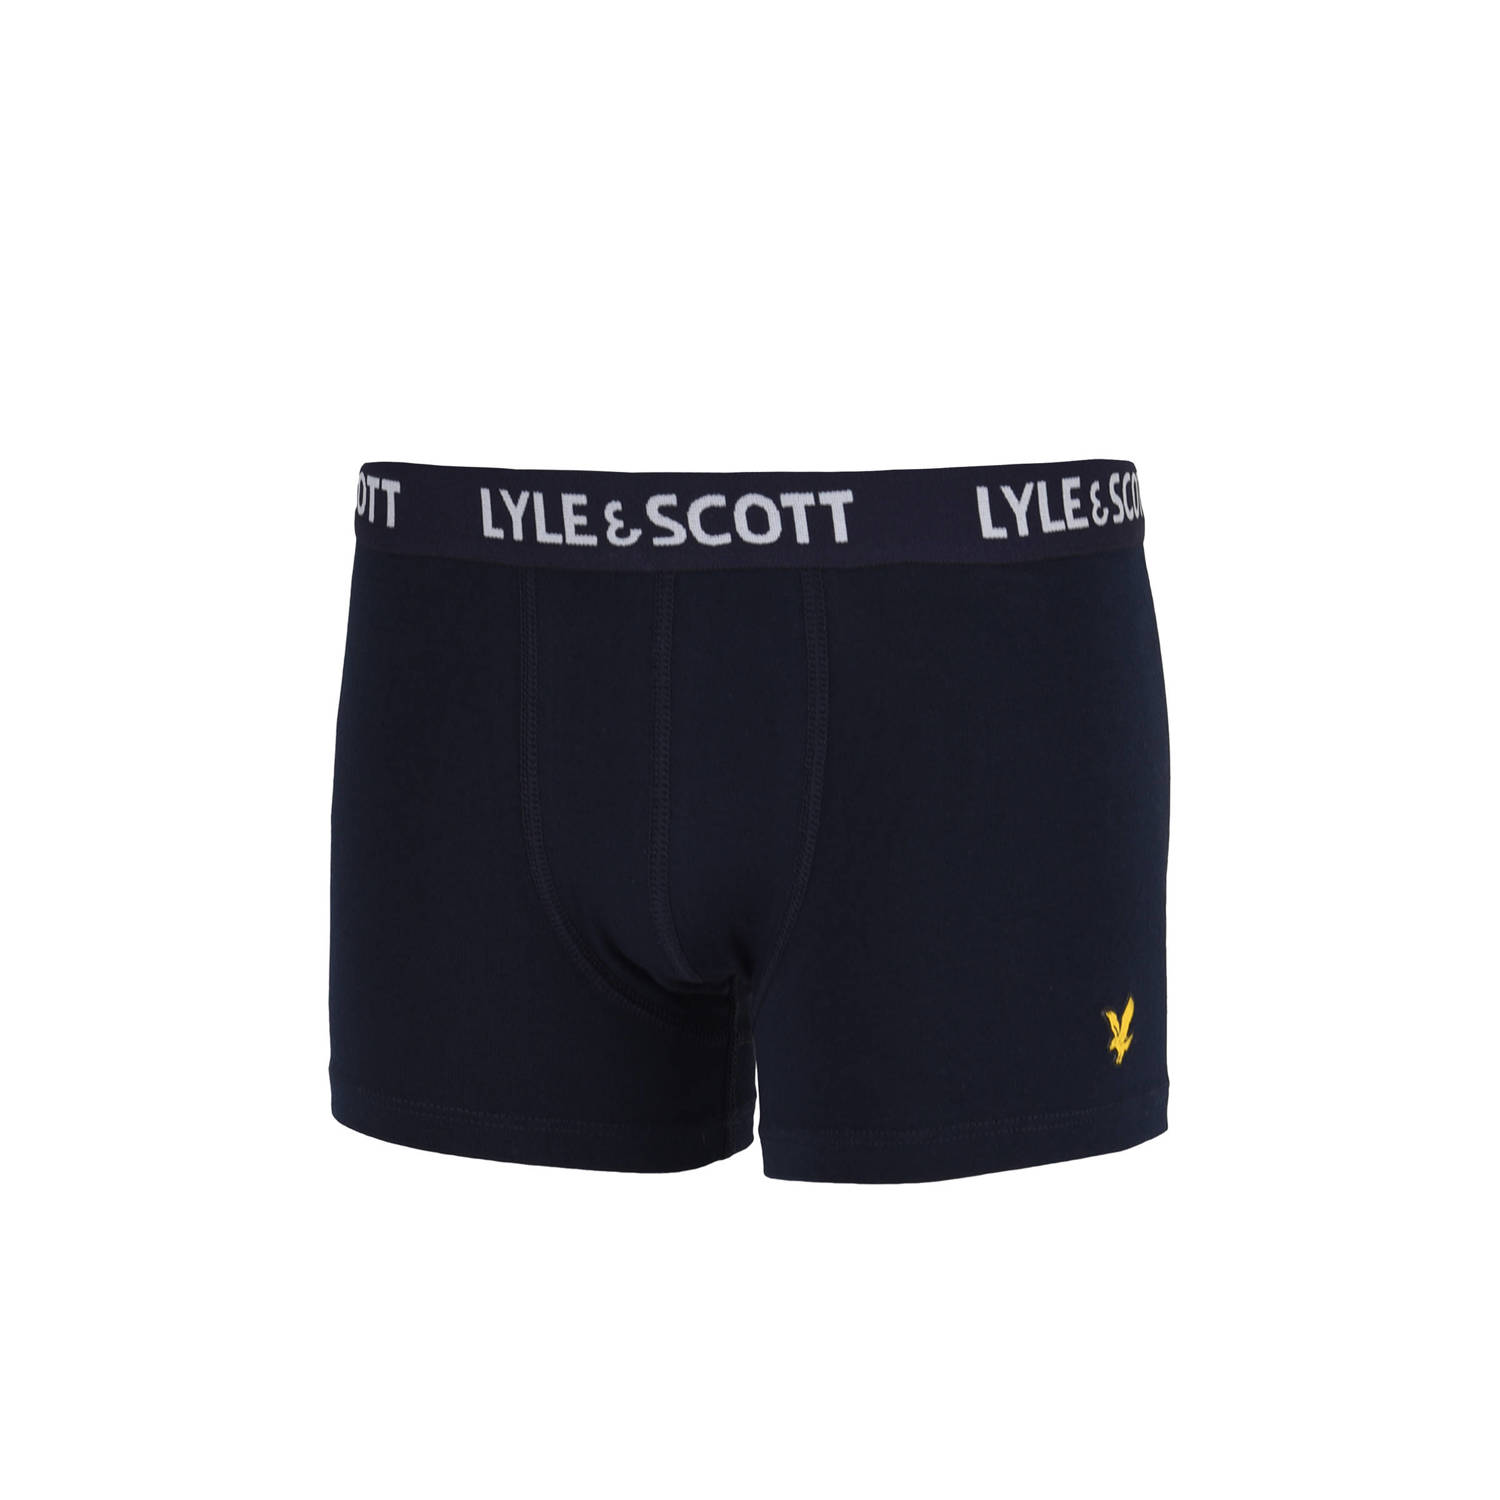 Lyle & Scott boxershort set van 3 donkerblauw